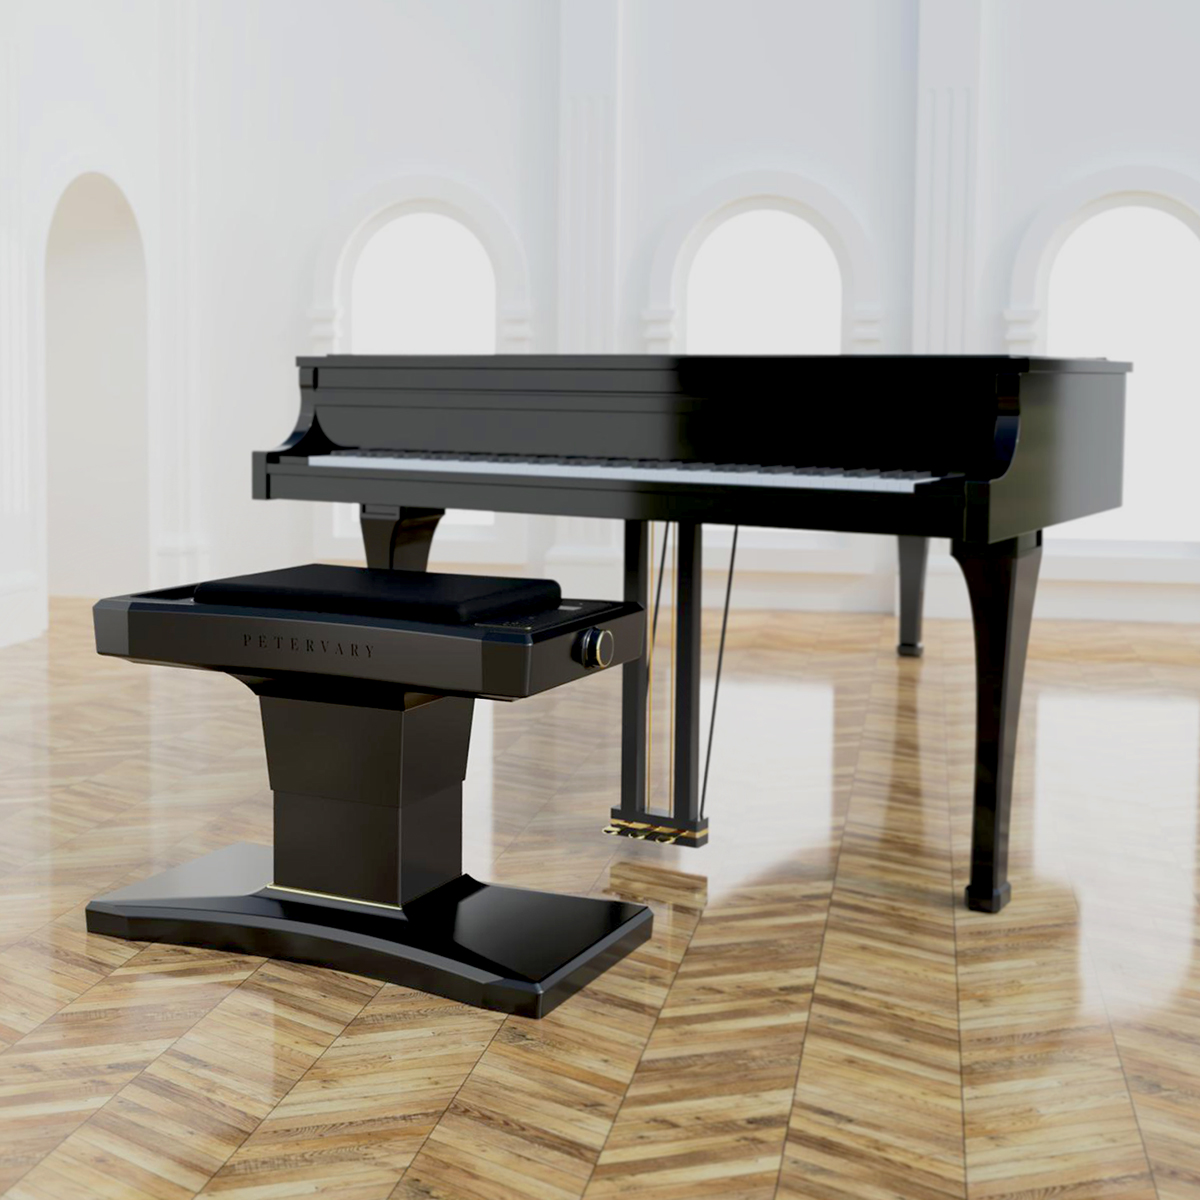 London Design Awards Winner - Petervary Smart Piano Bench